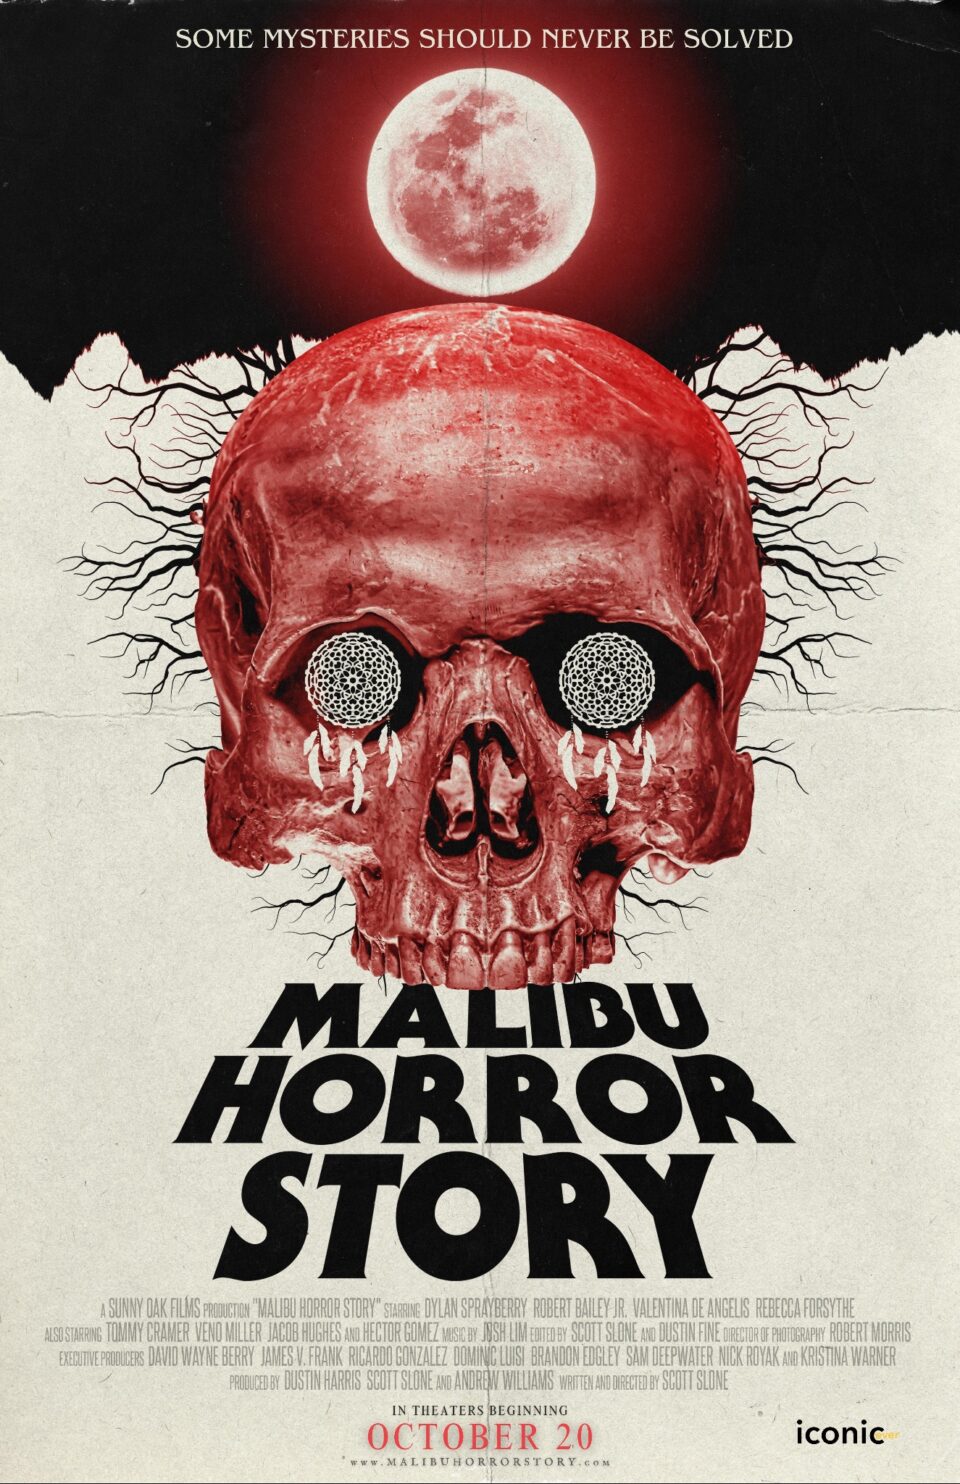 Malibu Horror Story poster